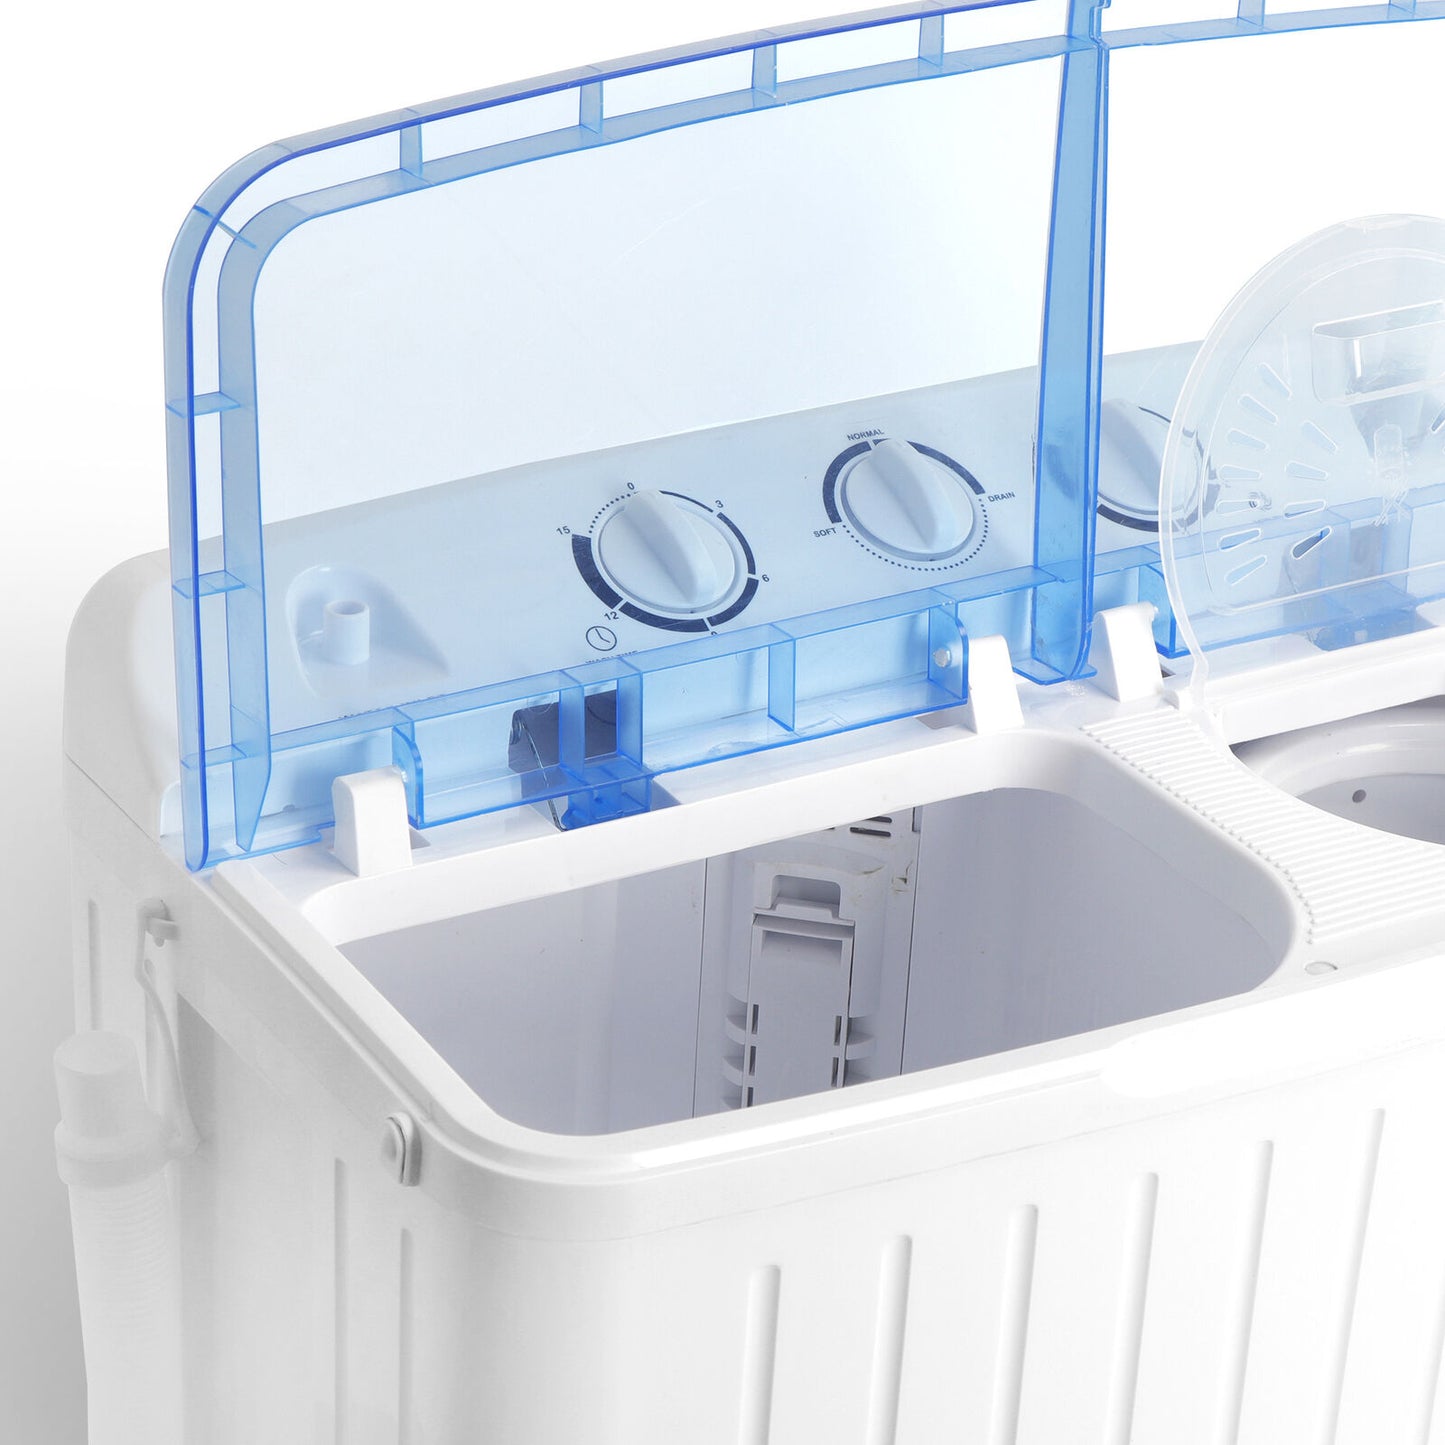 Portable Mini Compact Twin Tub Washing Machine 17.6lbs Washer and Dryer Laundry